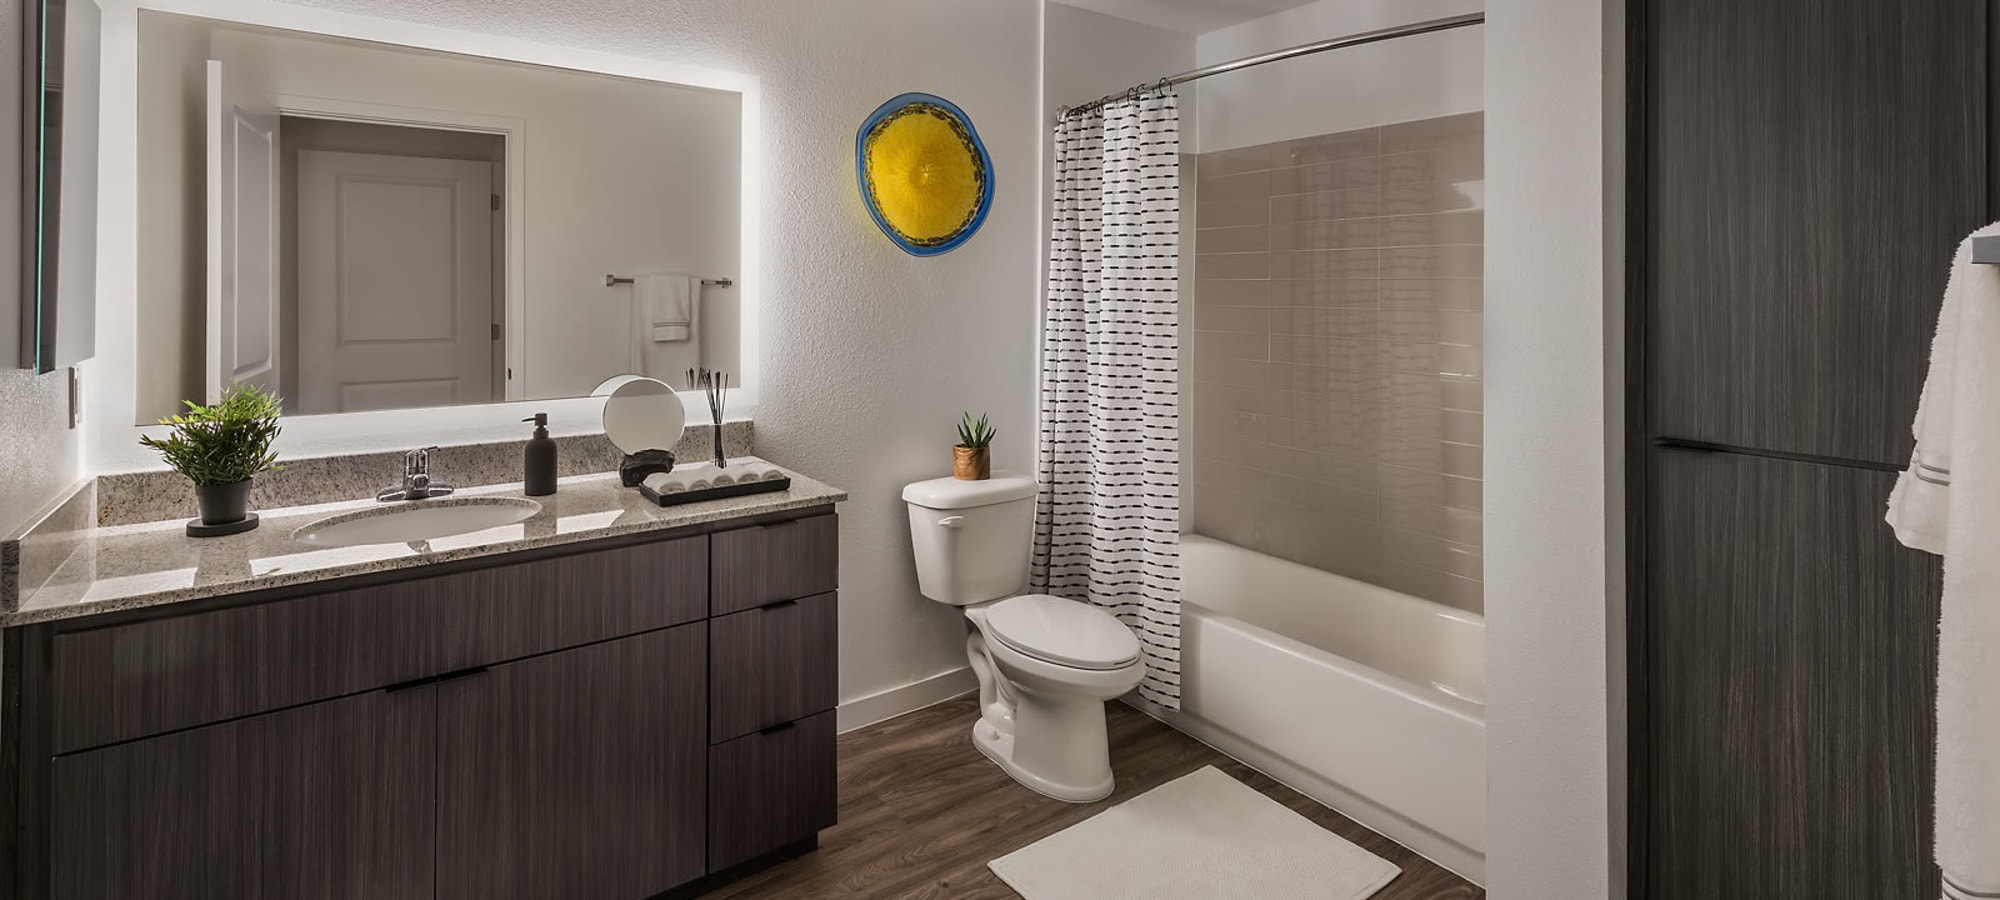 Bathroom at Villa Vita Apartments in Peoria, Arizona